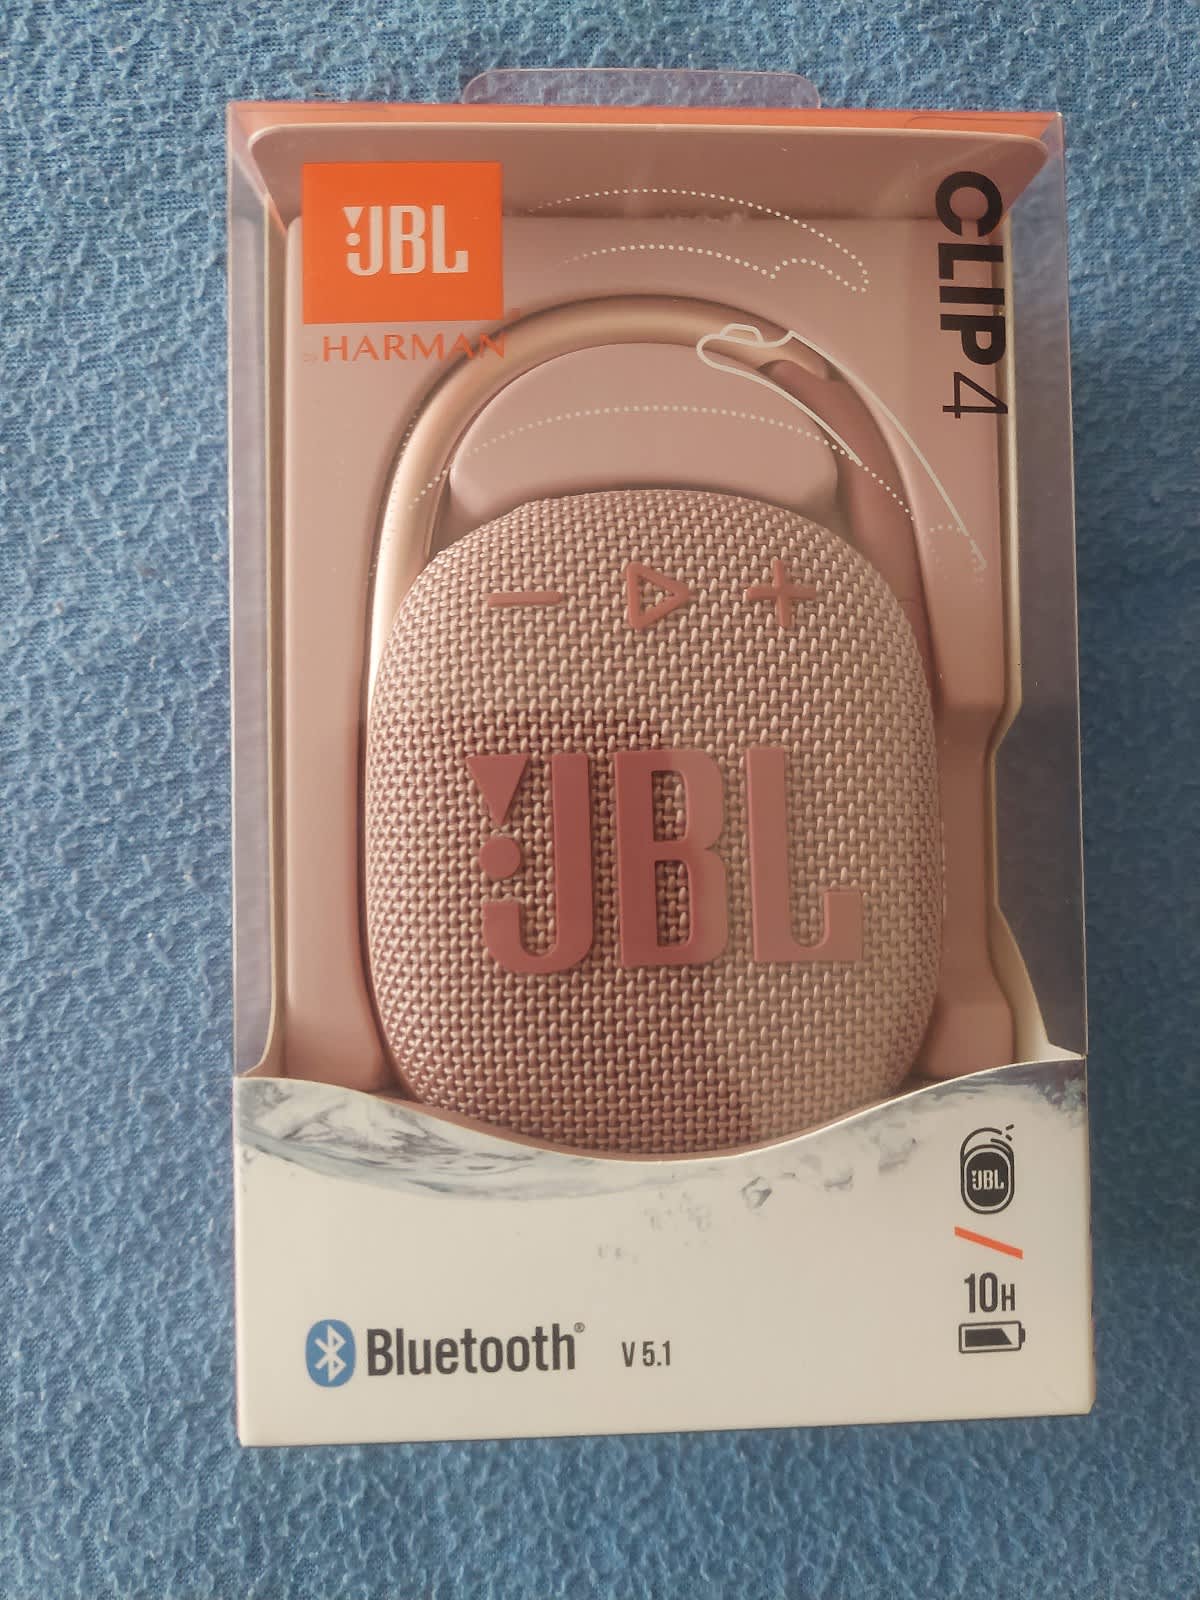 2 Units JBL Clip 4 Portable Bluetooth Speaker (Black), 1 - Harris